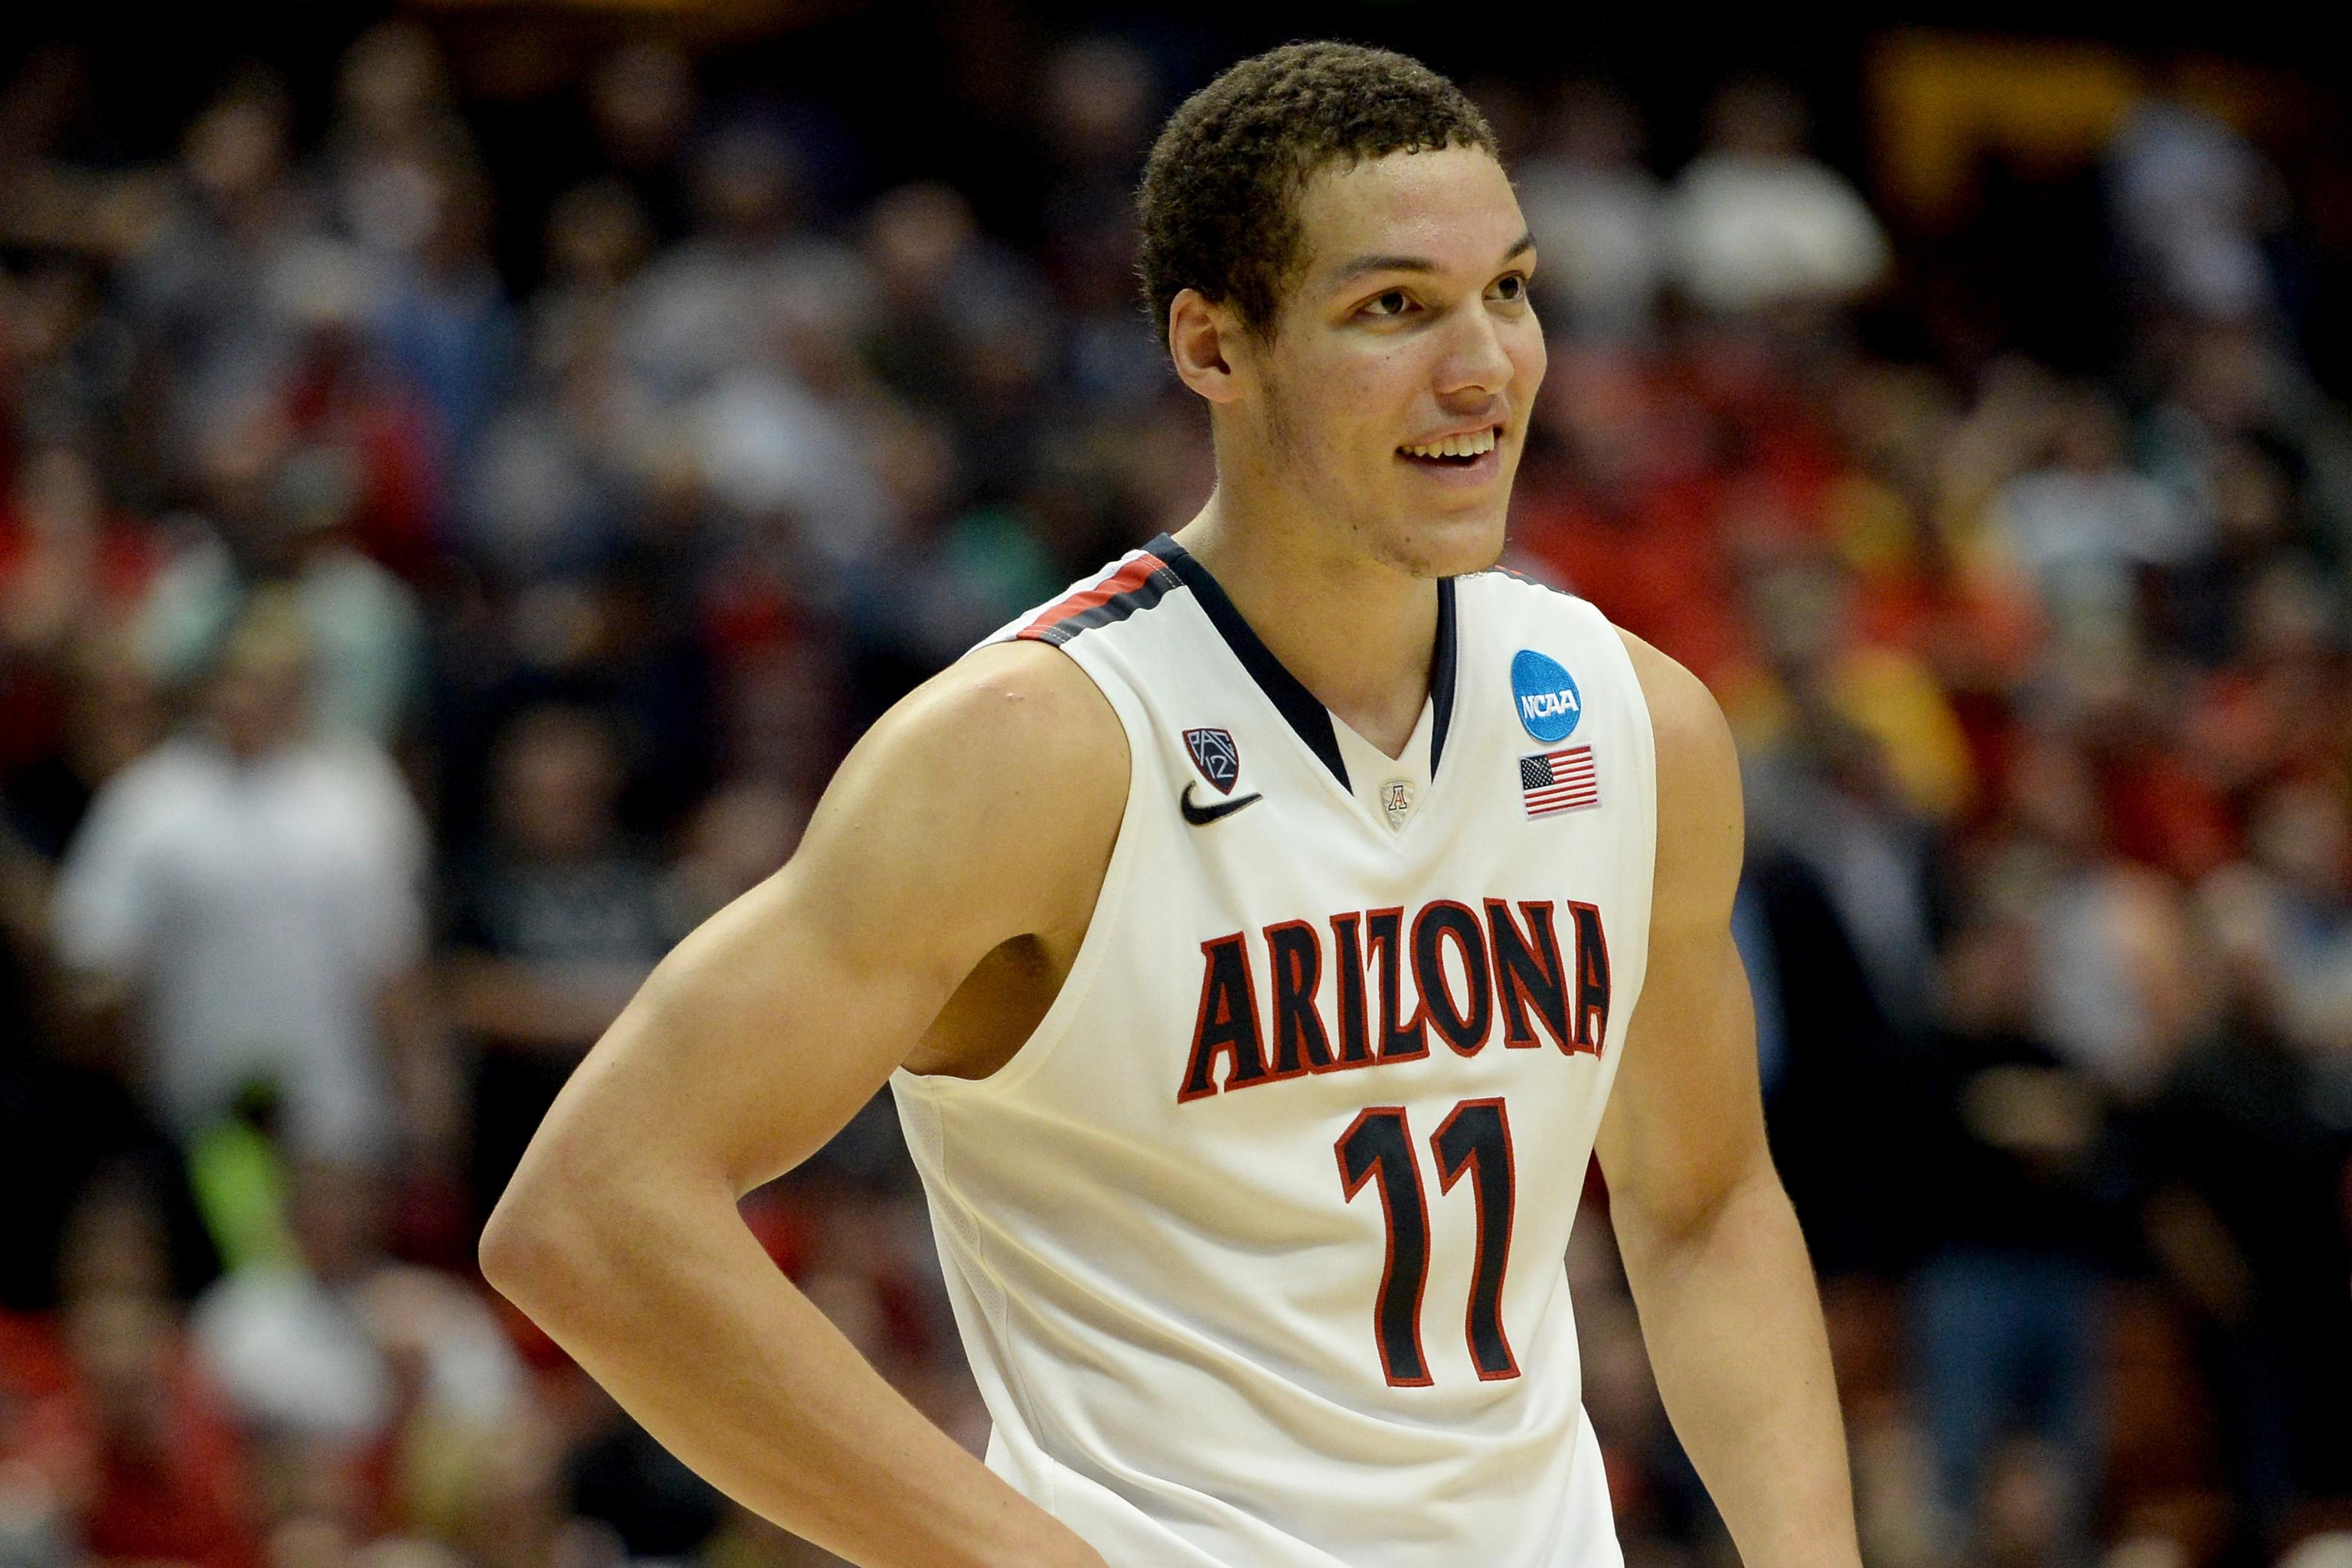 Aaron Gordon of Arizona Wildcats named basketball athlete of the